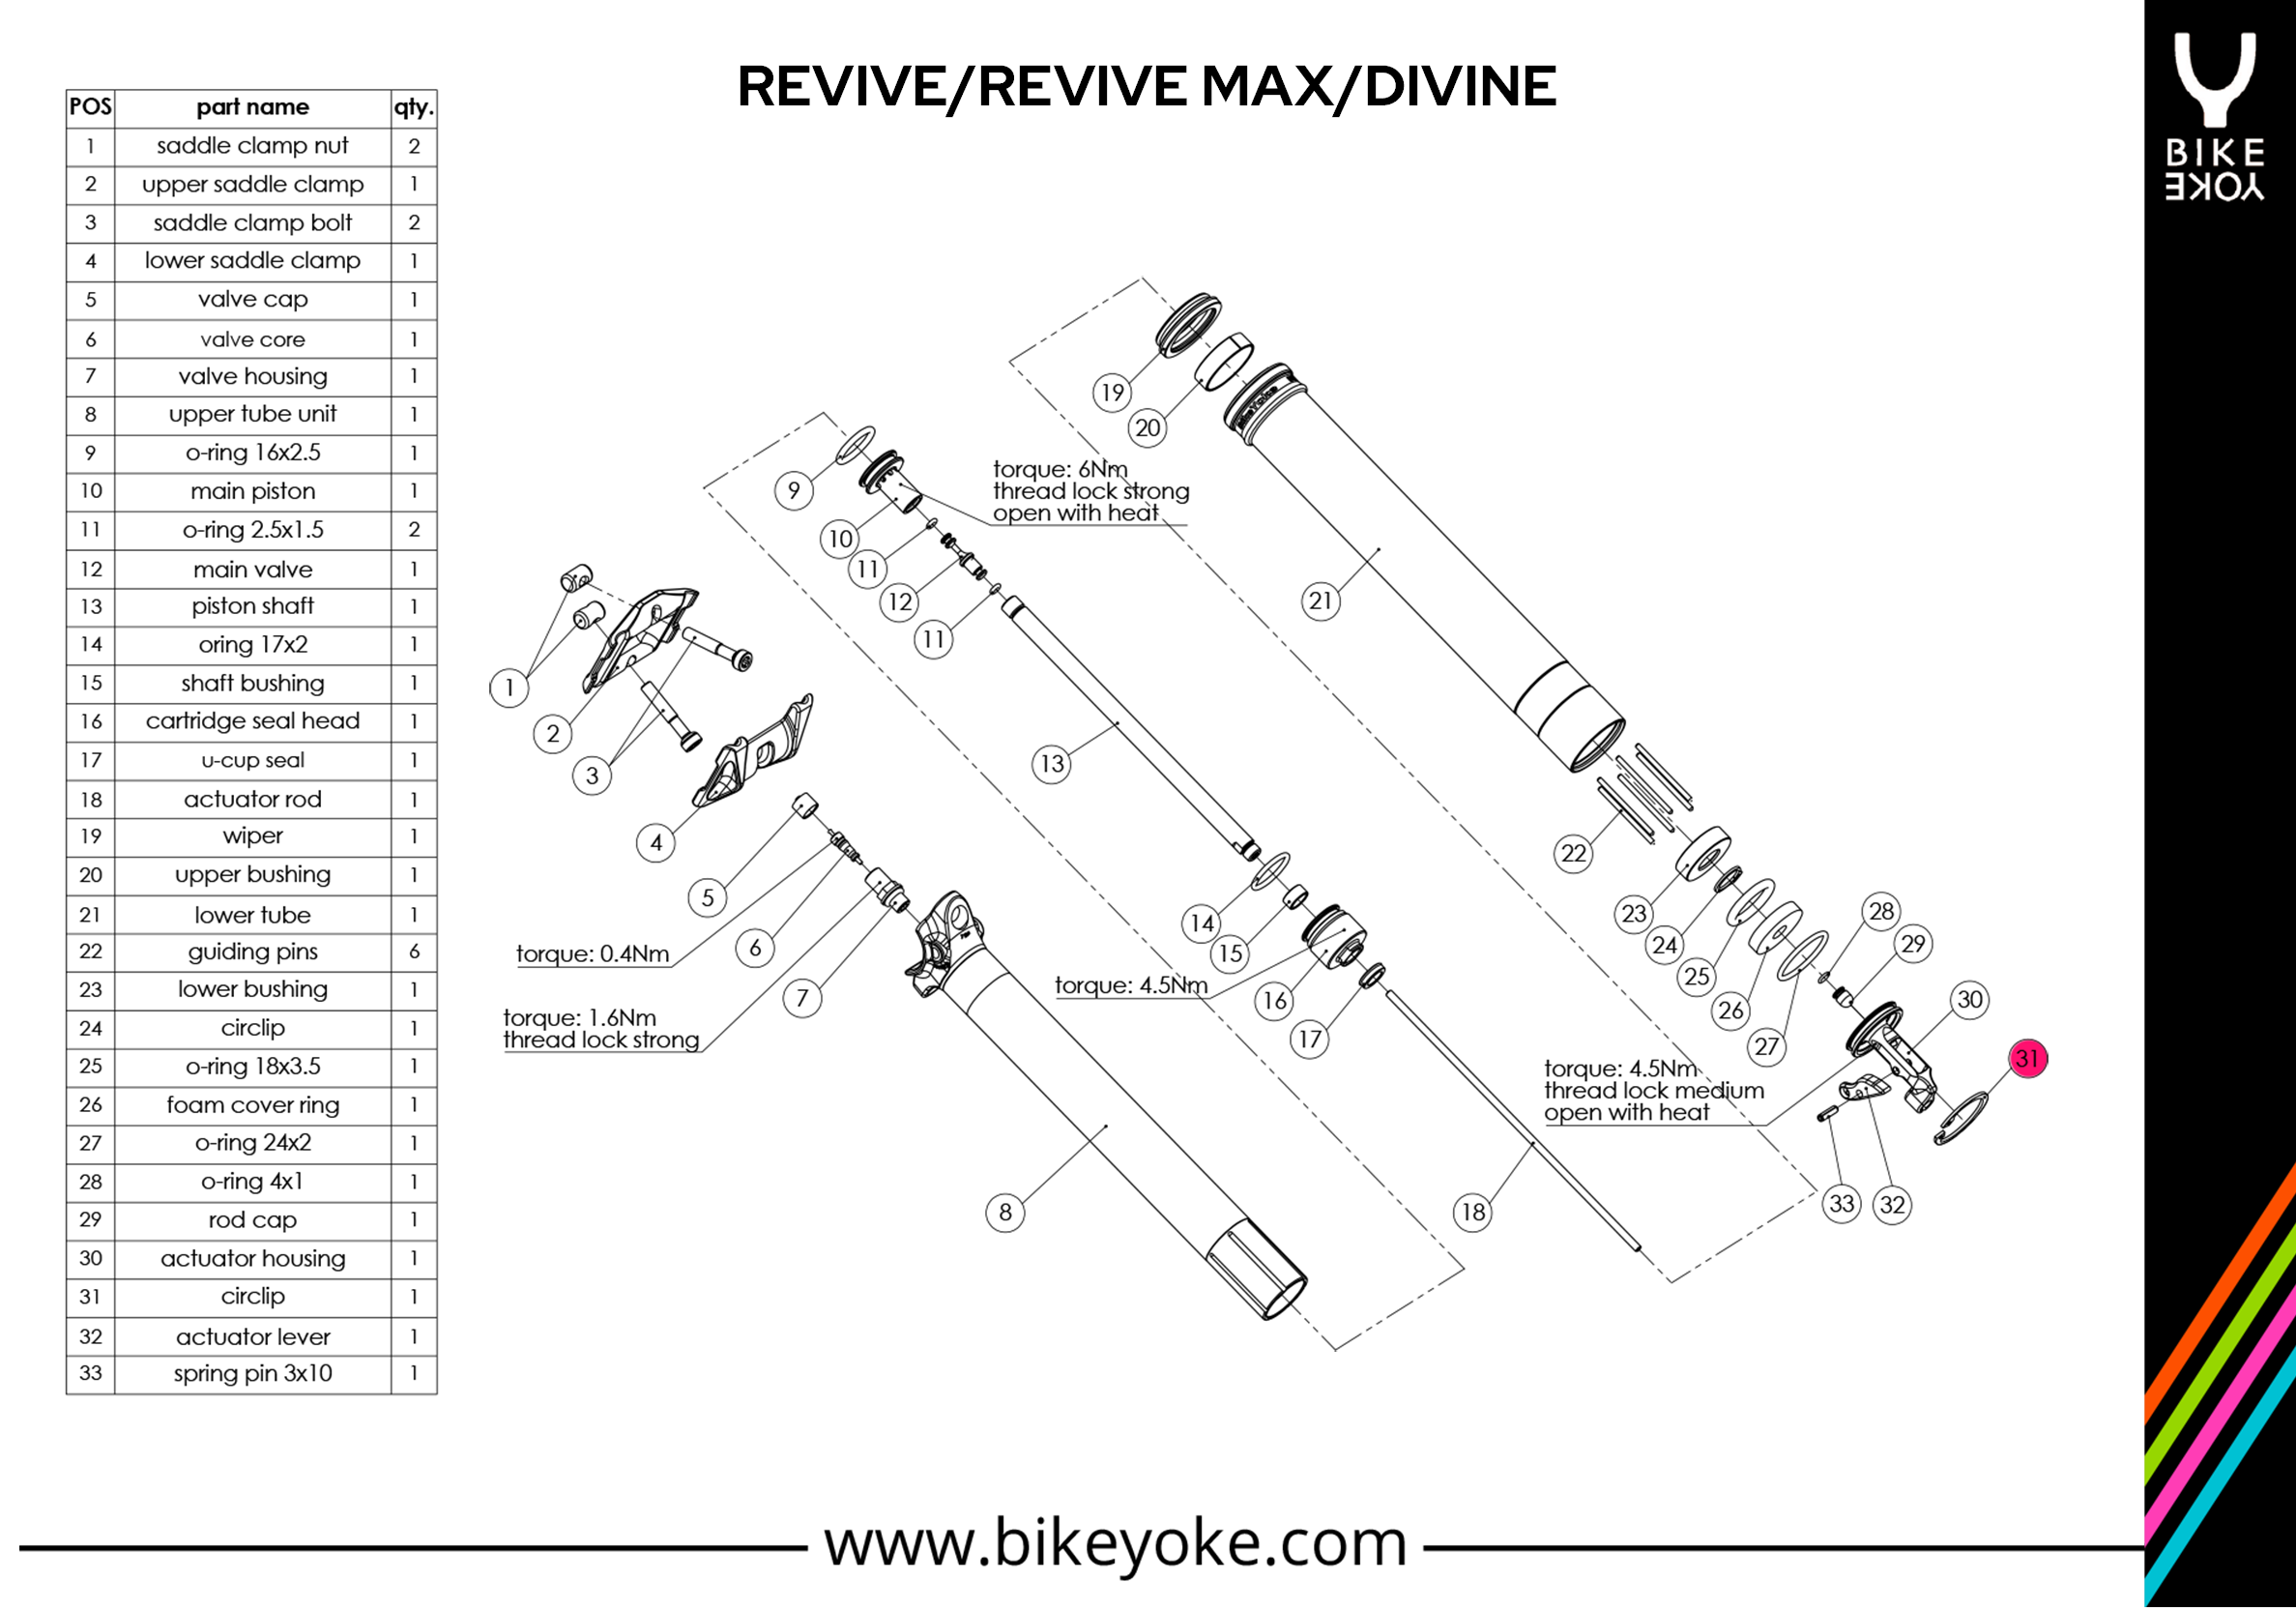 REVIVE / DIVINE - lower tube circlip